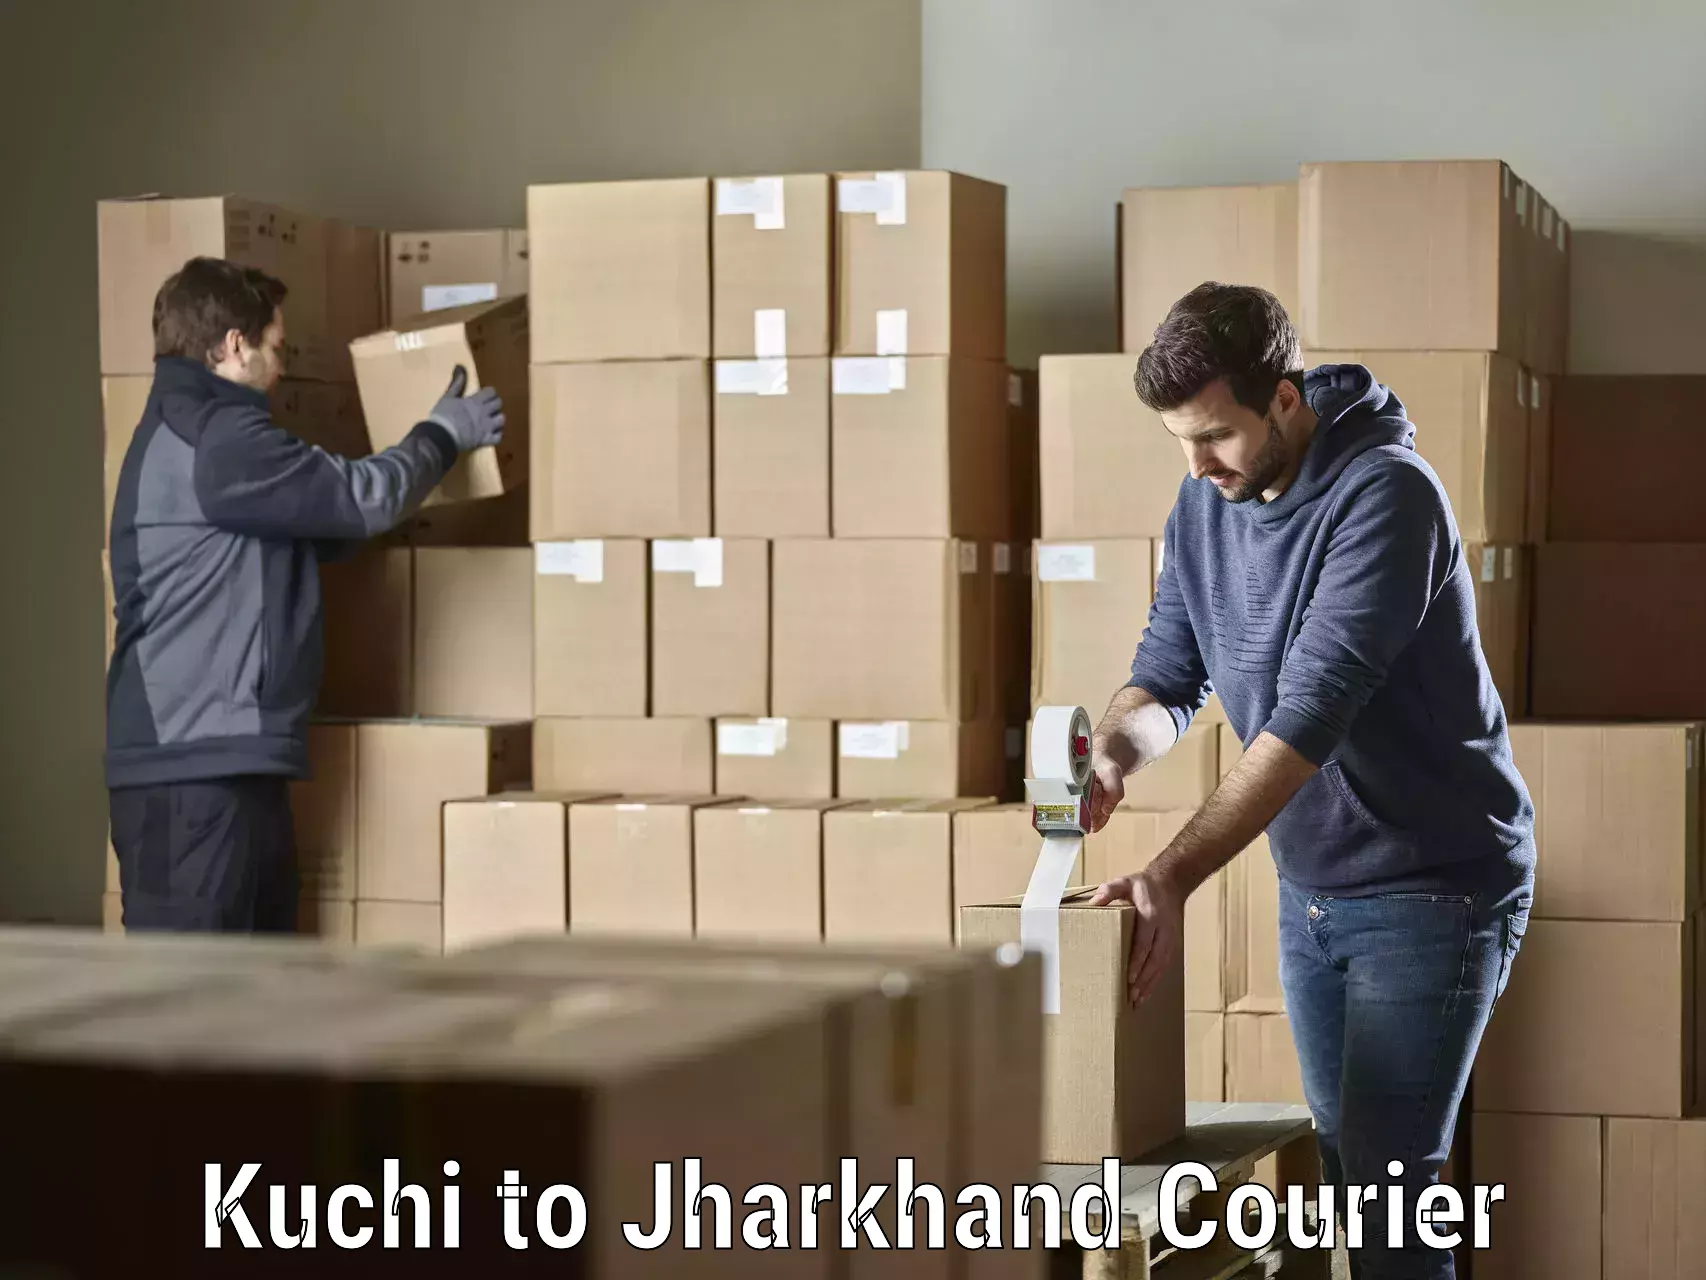 Courier service comparison Kuchi to Chatra